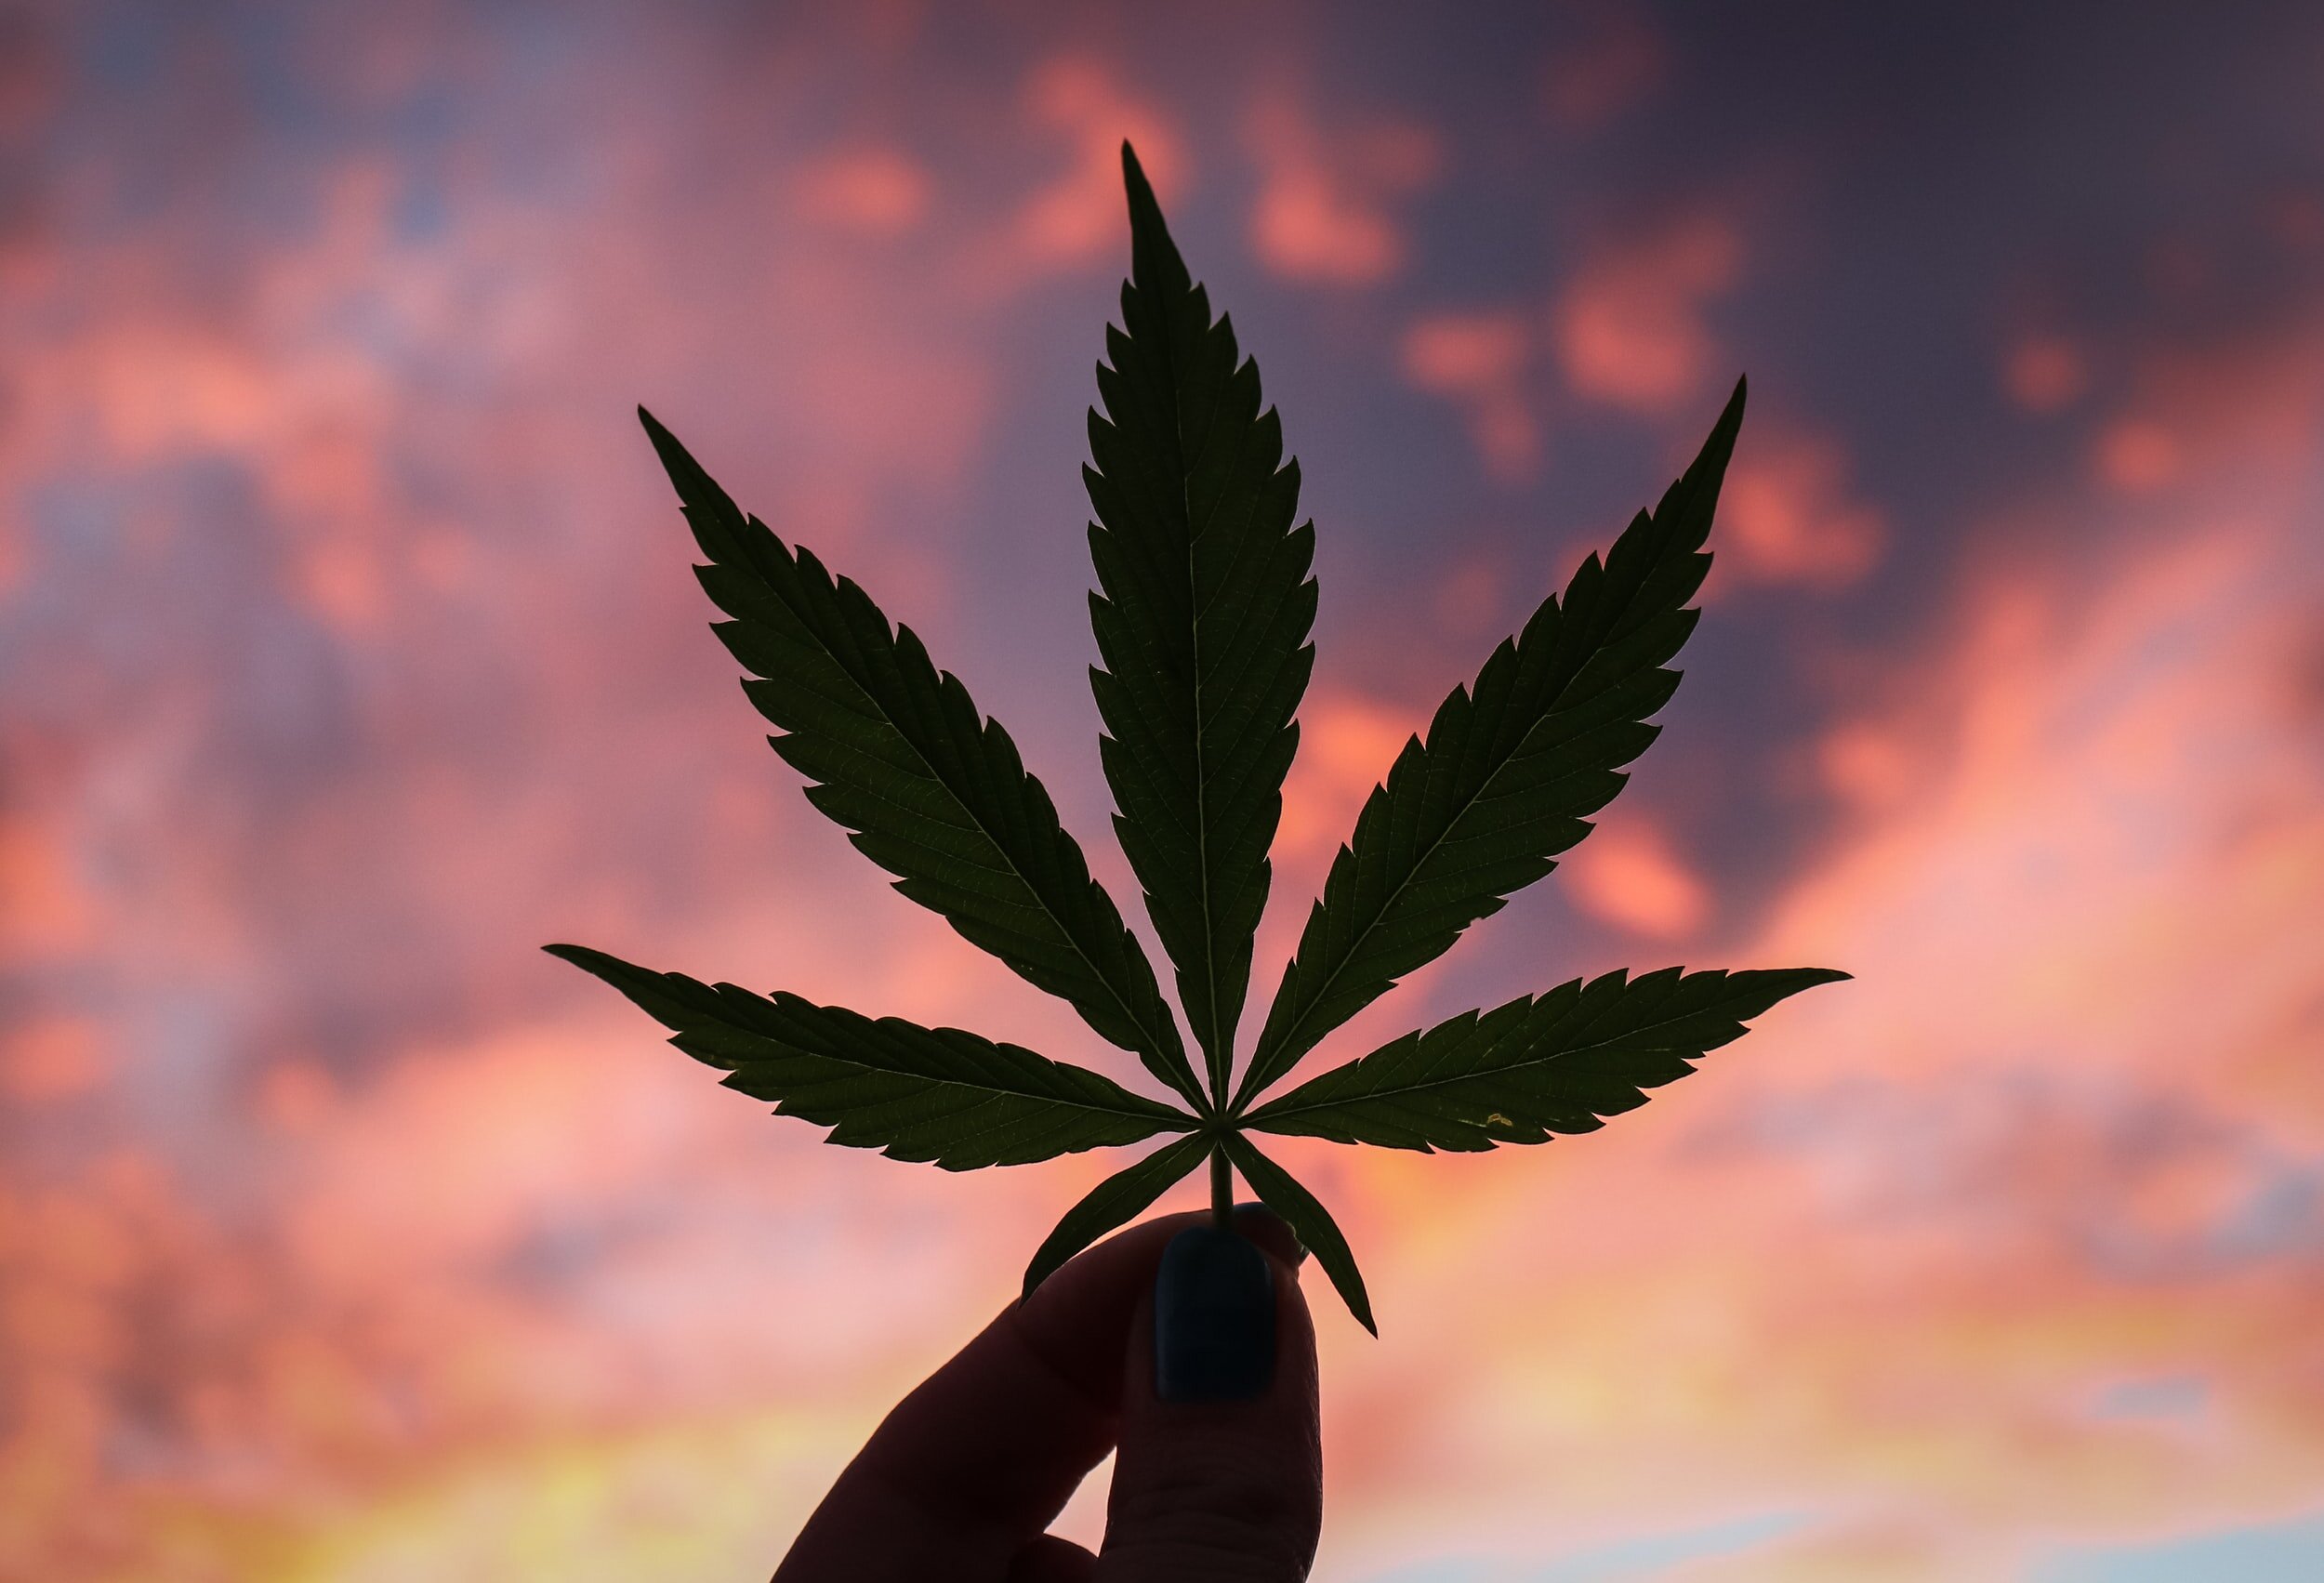 How Should Virginia Spend Its Cannabis Profits?